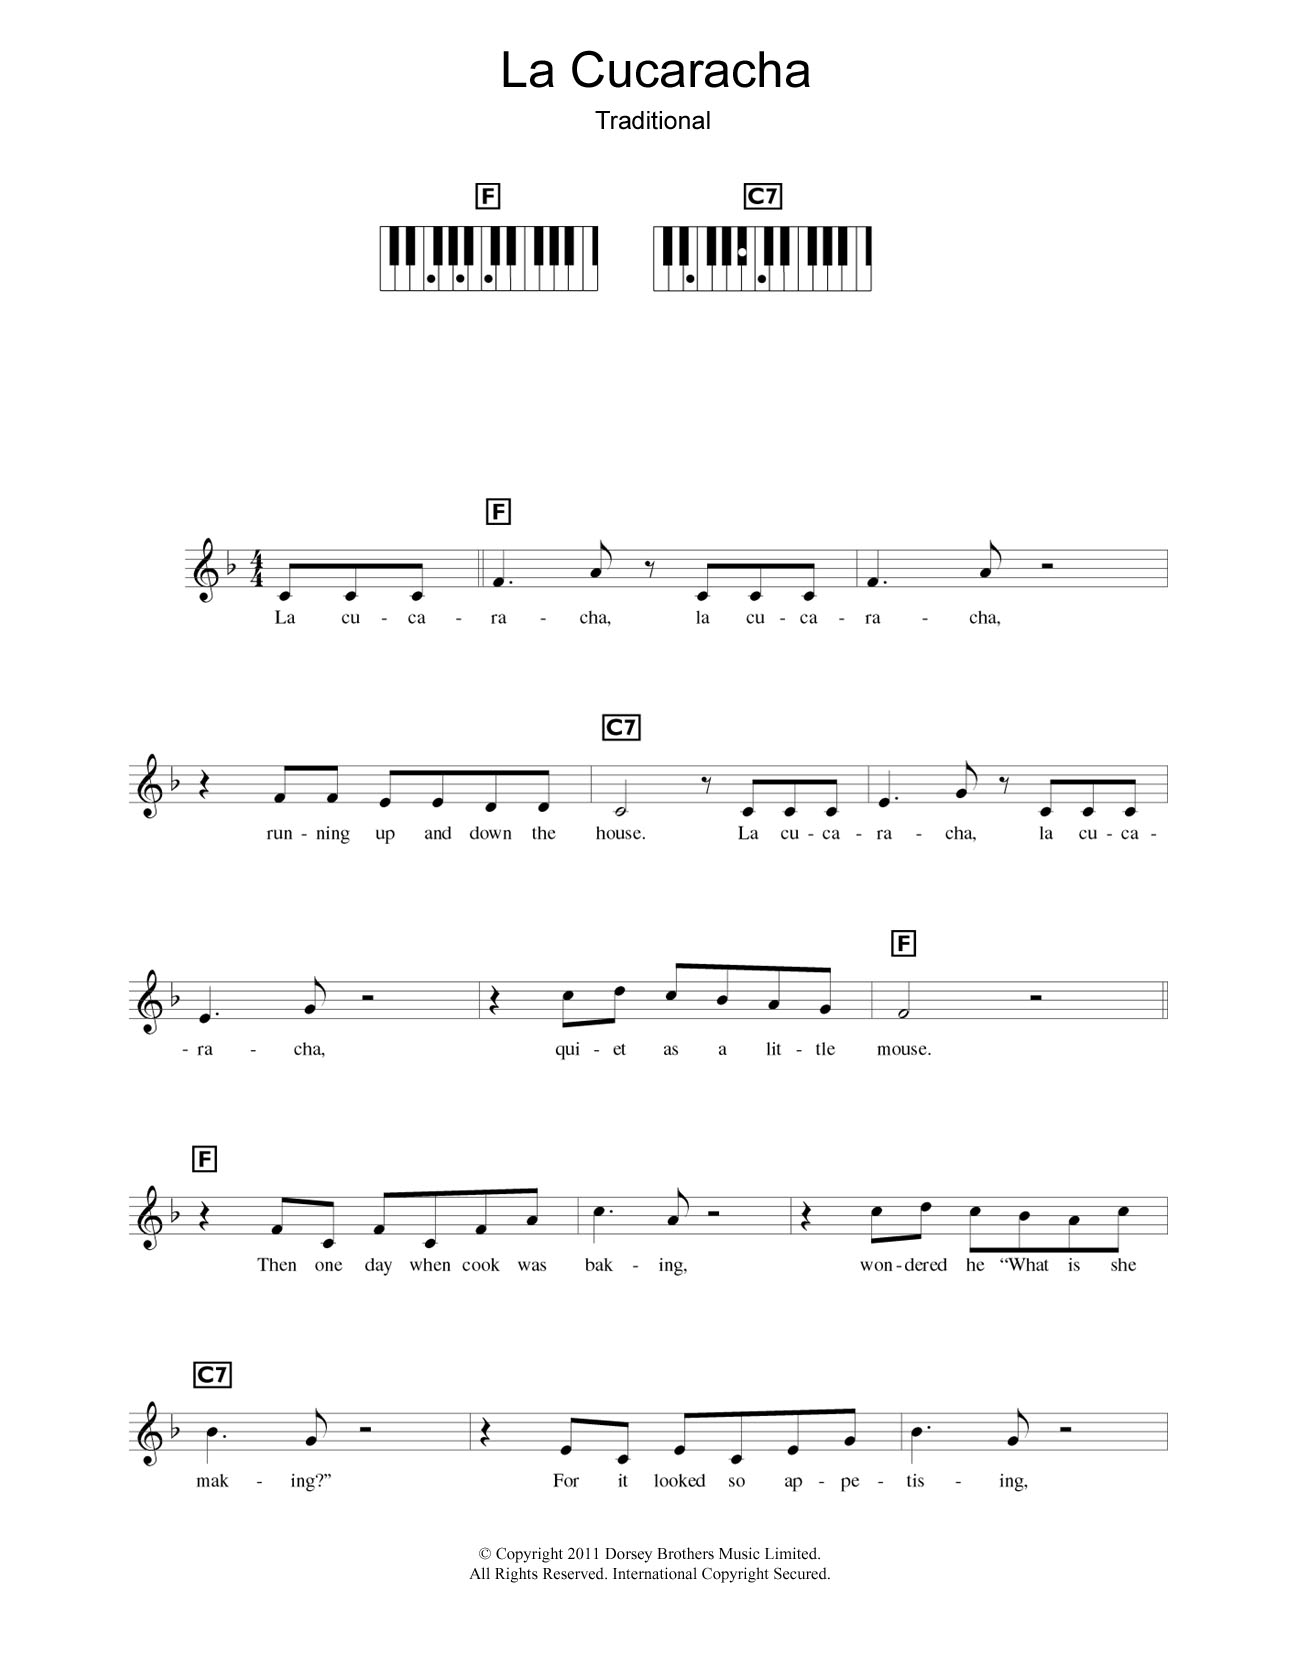 Xavier Cugat La Cucaracha (The Cockroach) Sheet Music Notes & Chords for Piano Chords/Lyrics - Download or Print PDF